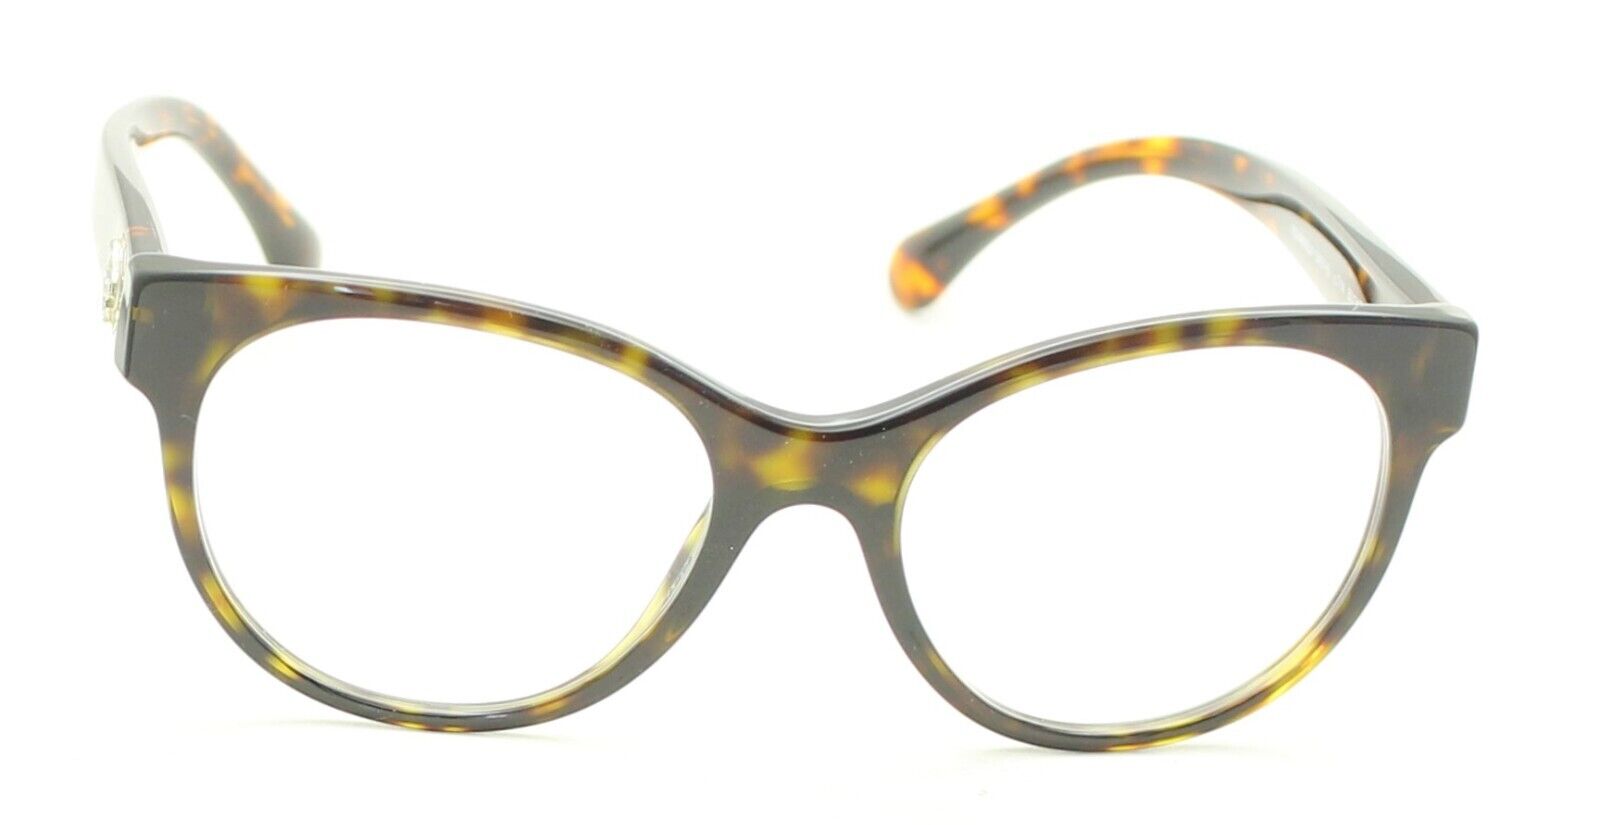 CHANEL 3431-B 714 50mm Eyewear FRAMES Eyeglasses RX Optical Glasses - New  Italy - GGV Eyewear